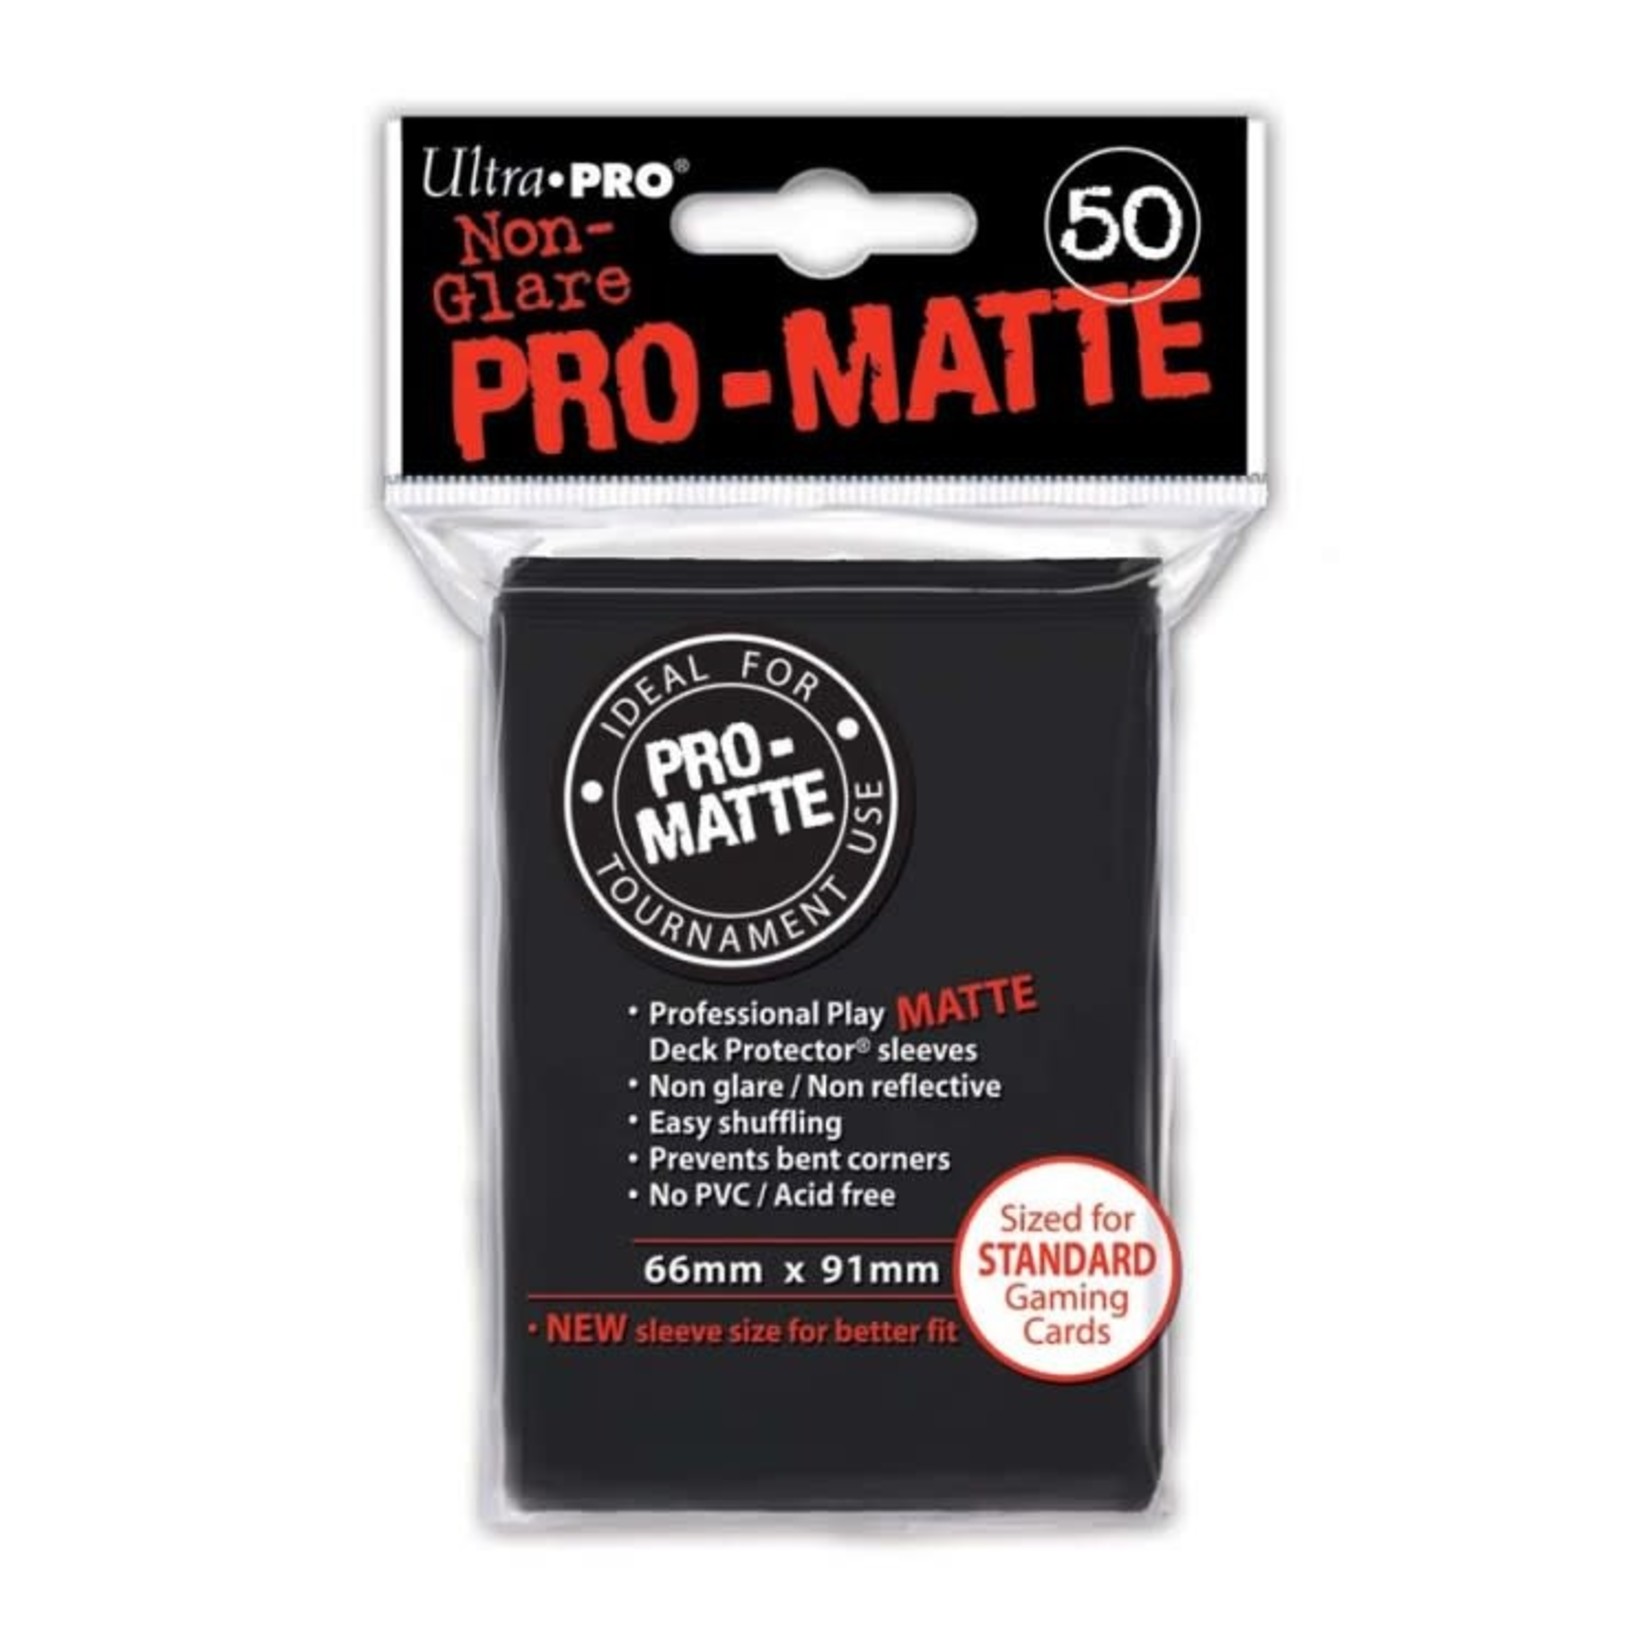 Ultra Pro Ultra Pro Pro-Matte Standard Deck Protector Sleeves Black 50 ct